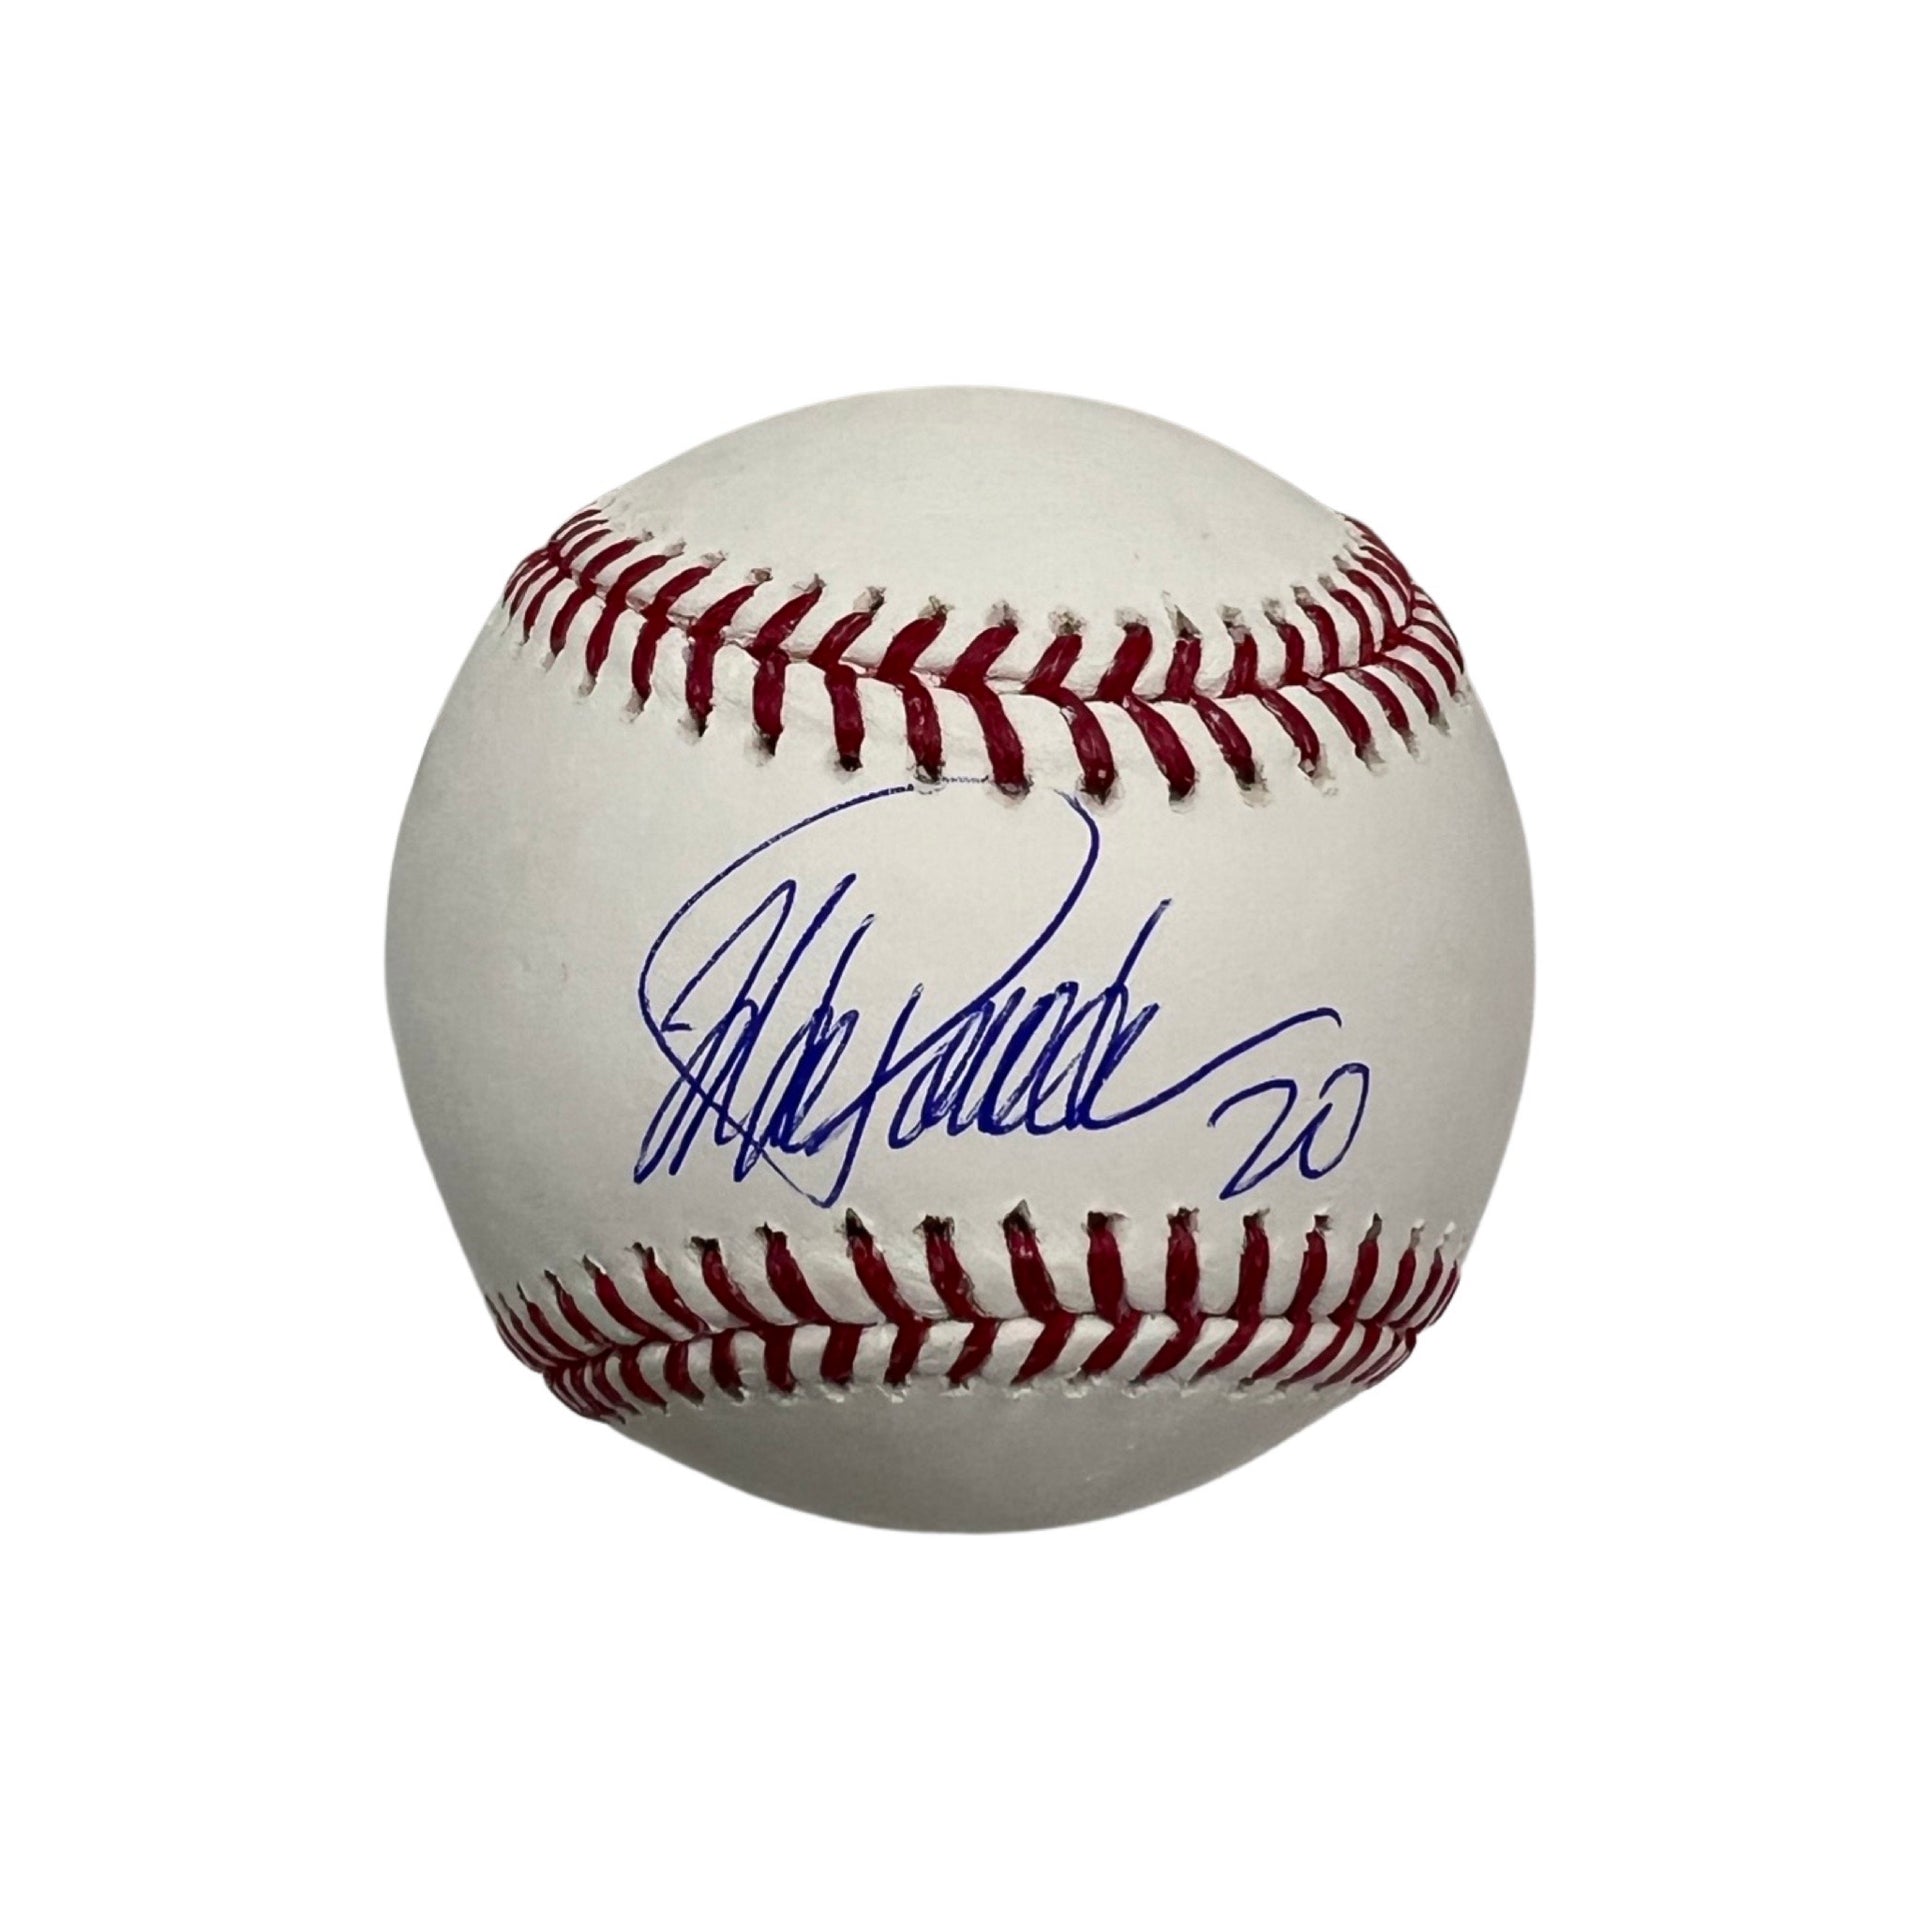 Jorge Posada New York Yankees Autographed Baseball with 99 WS